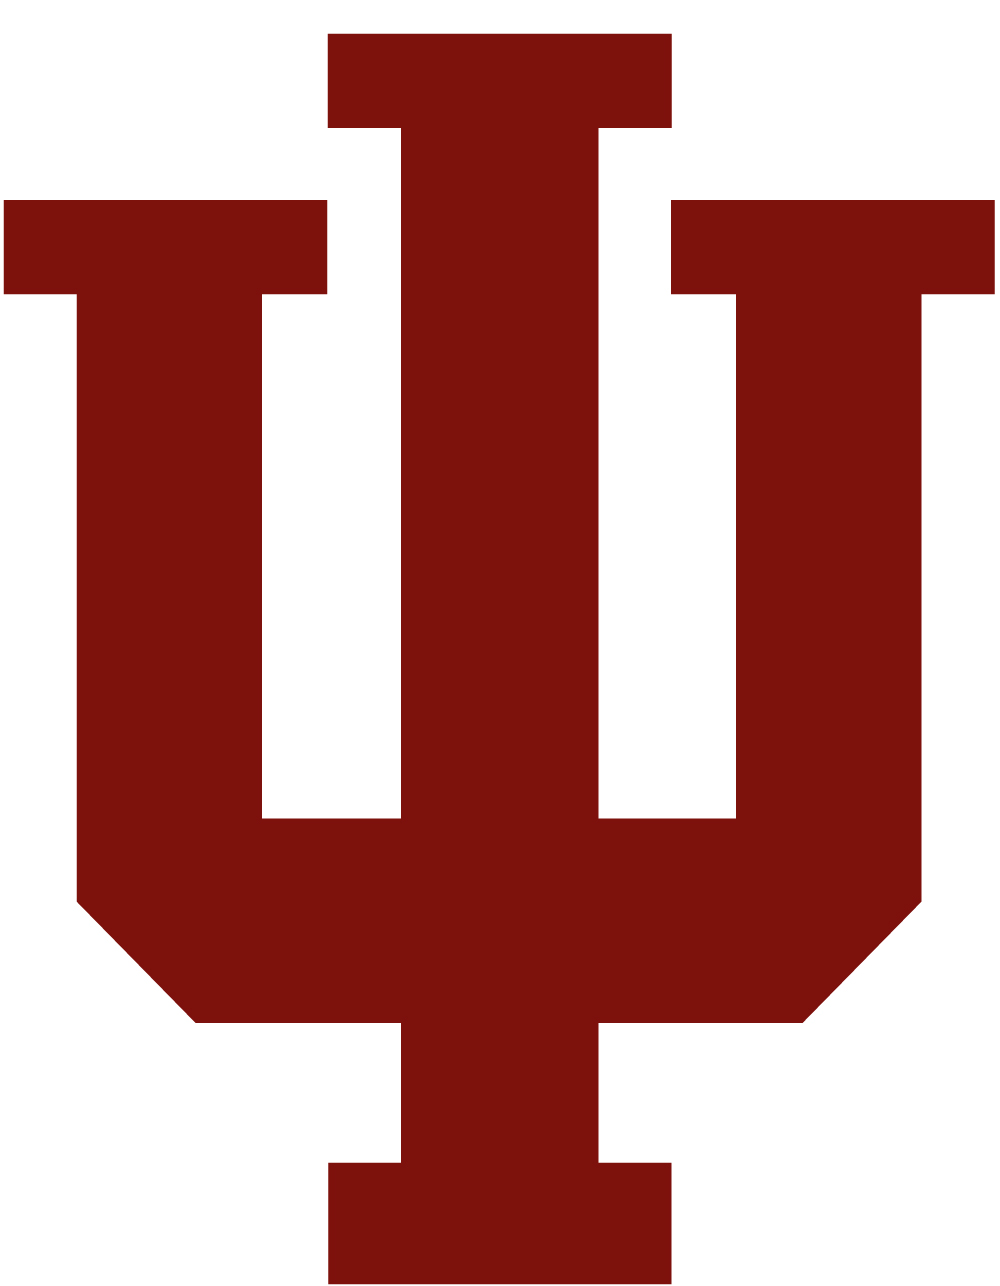 Indiana University in Bloomington logo